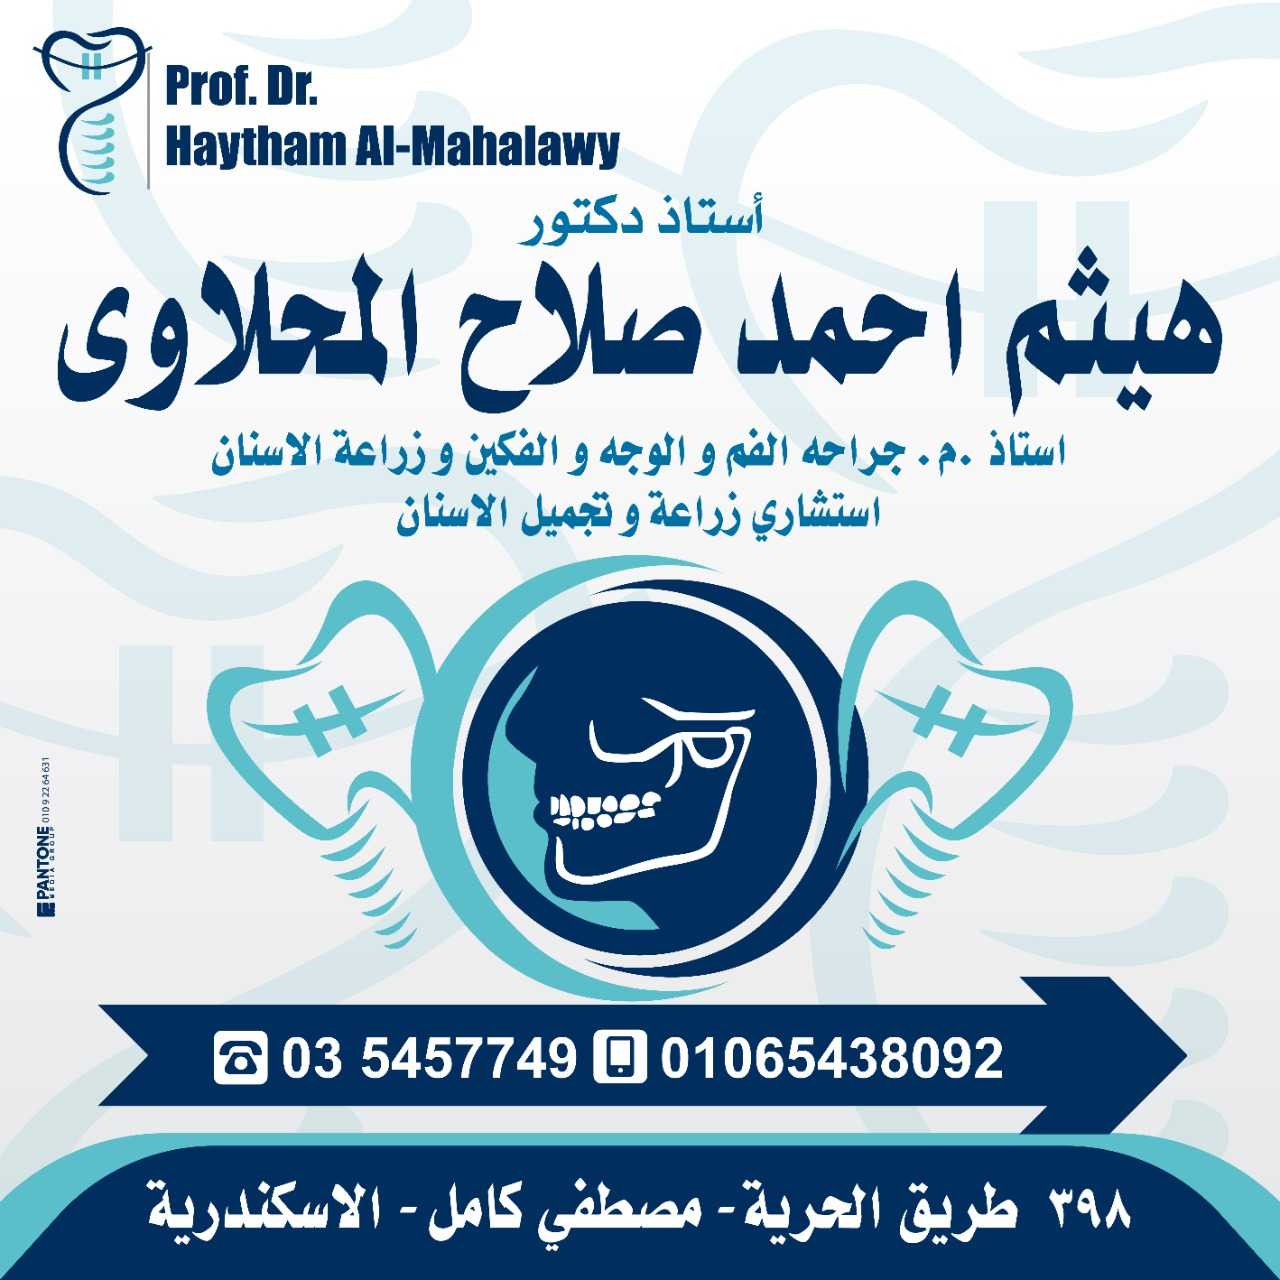 Dr. Haitham Ahmed Salah El Mahlawy, Professor of Oral Surgery and Dental Implants